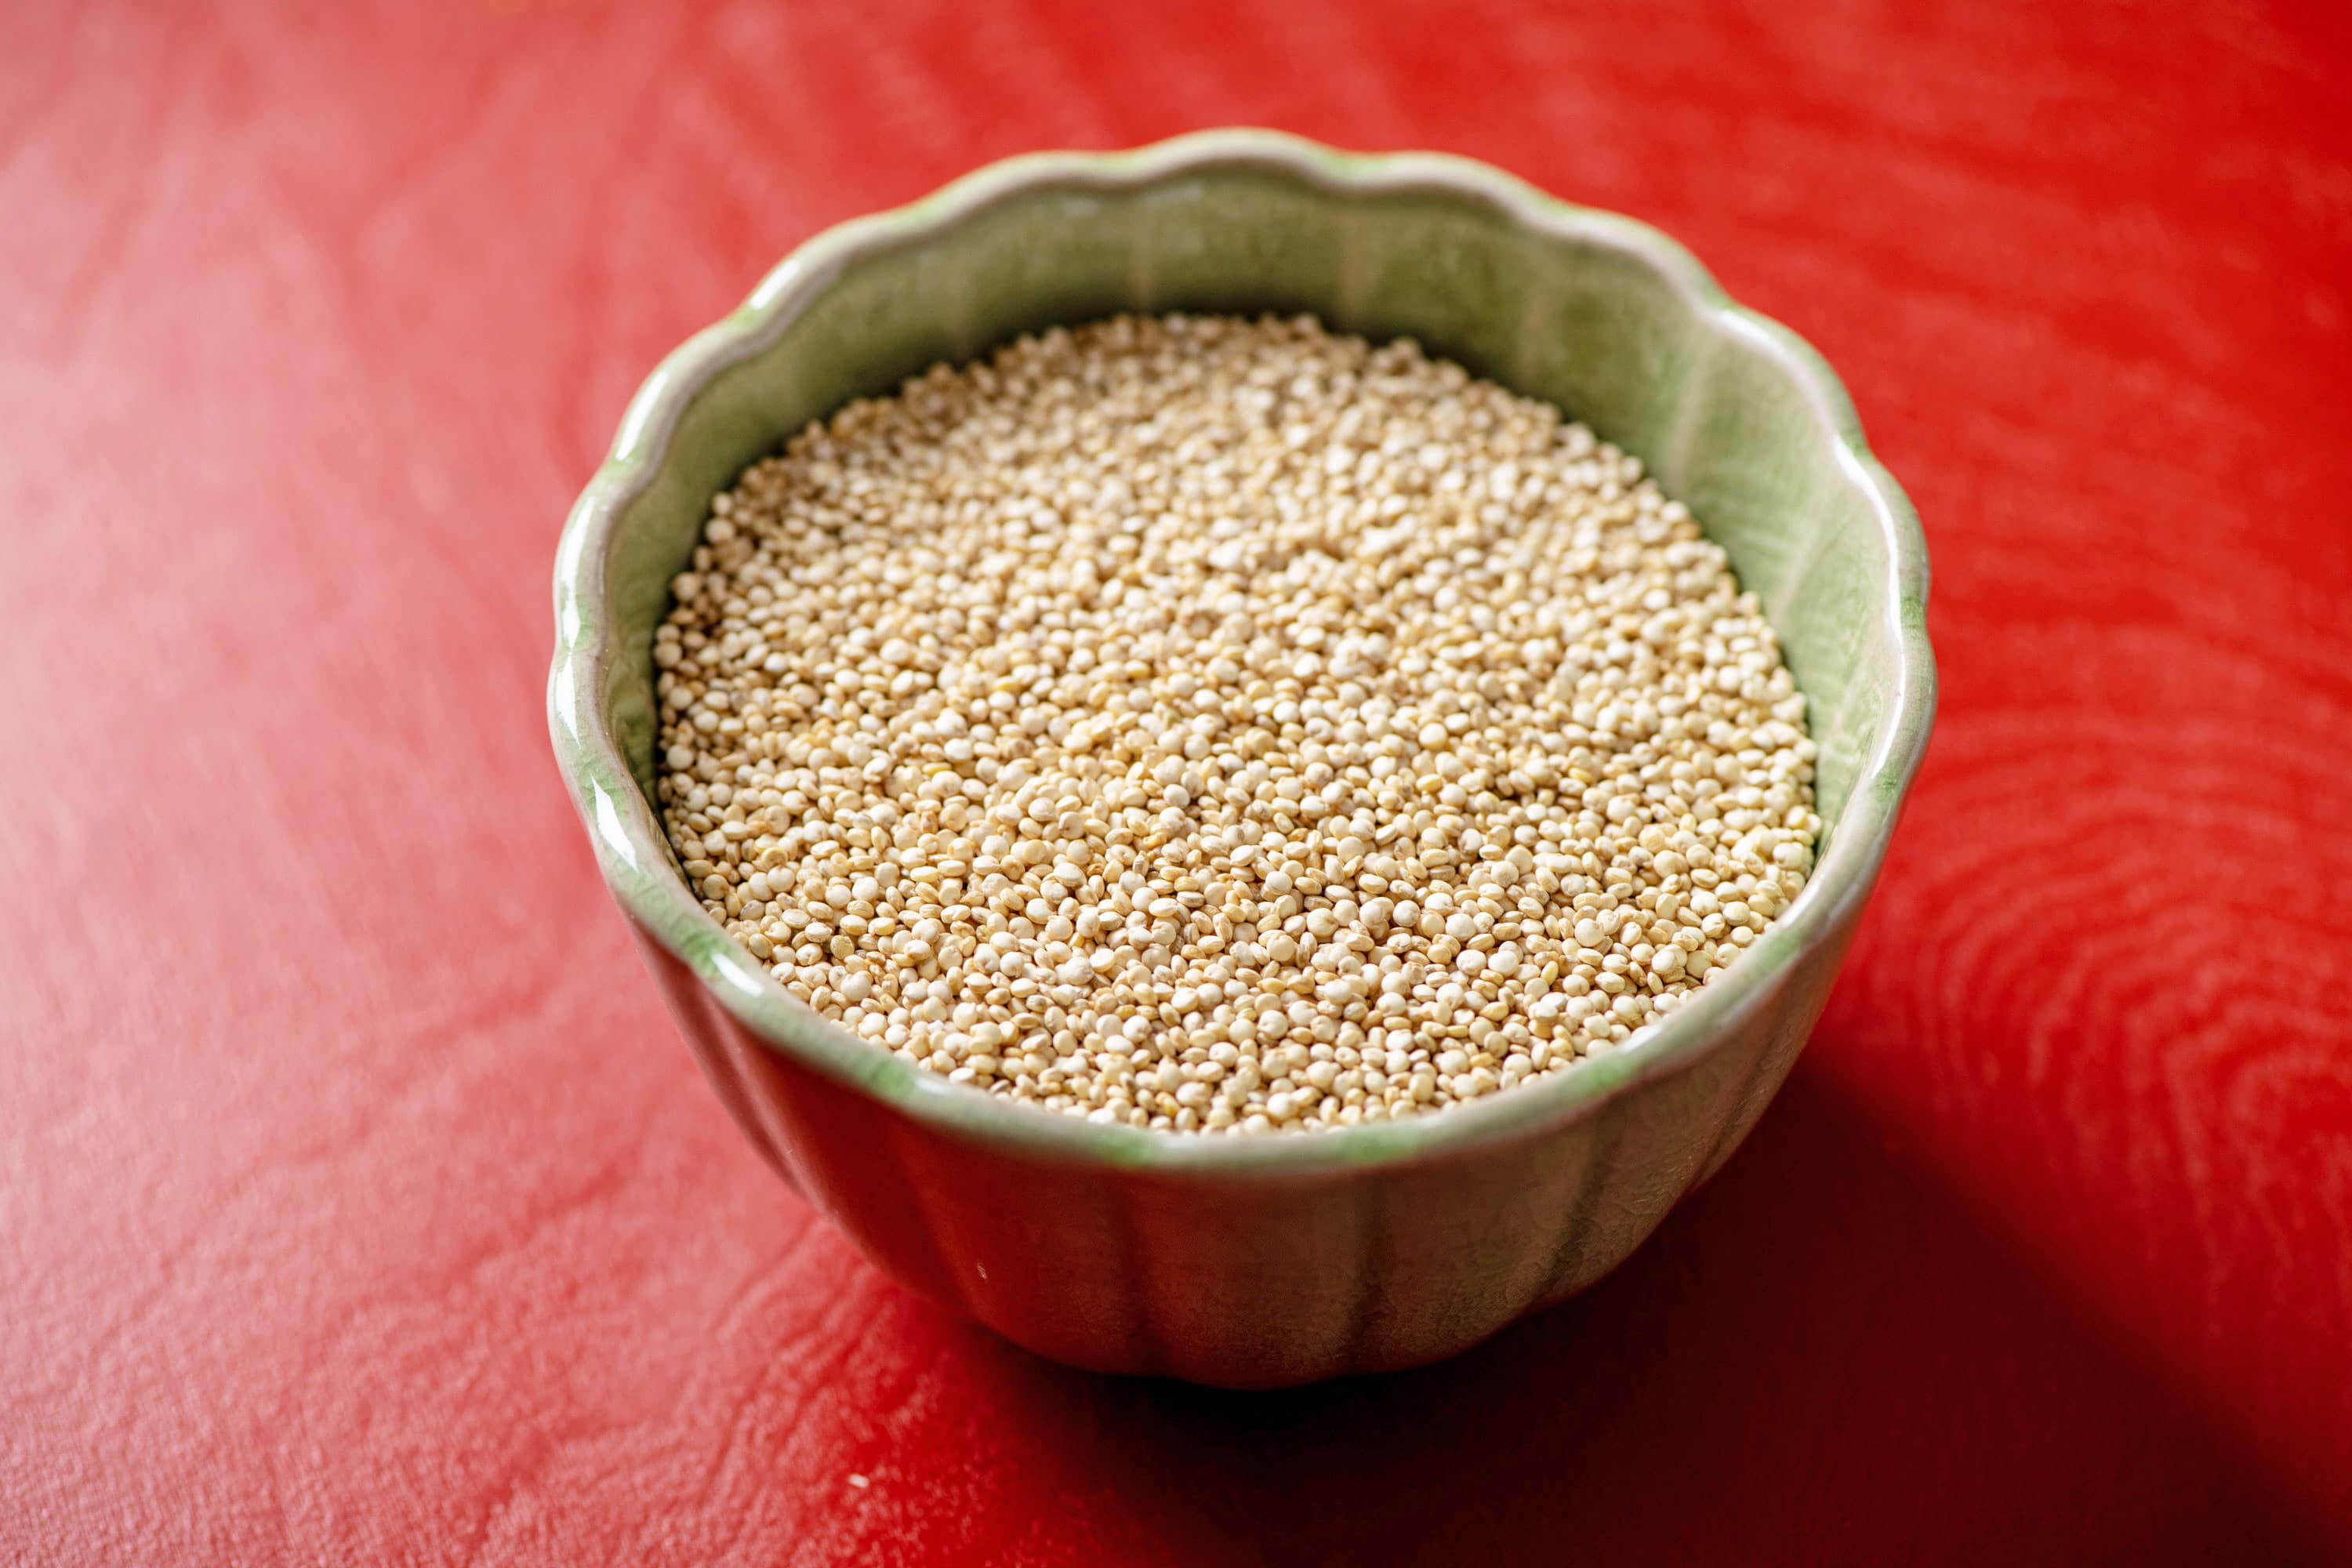 uncooked quinoa in a small green bowl